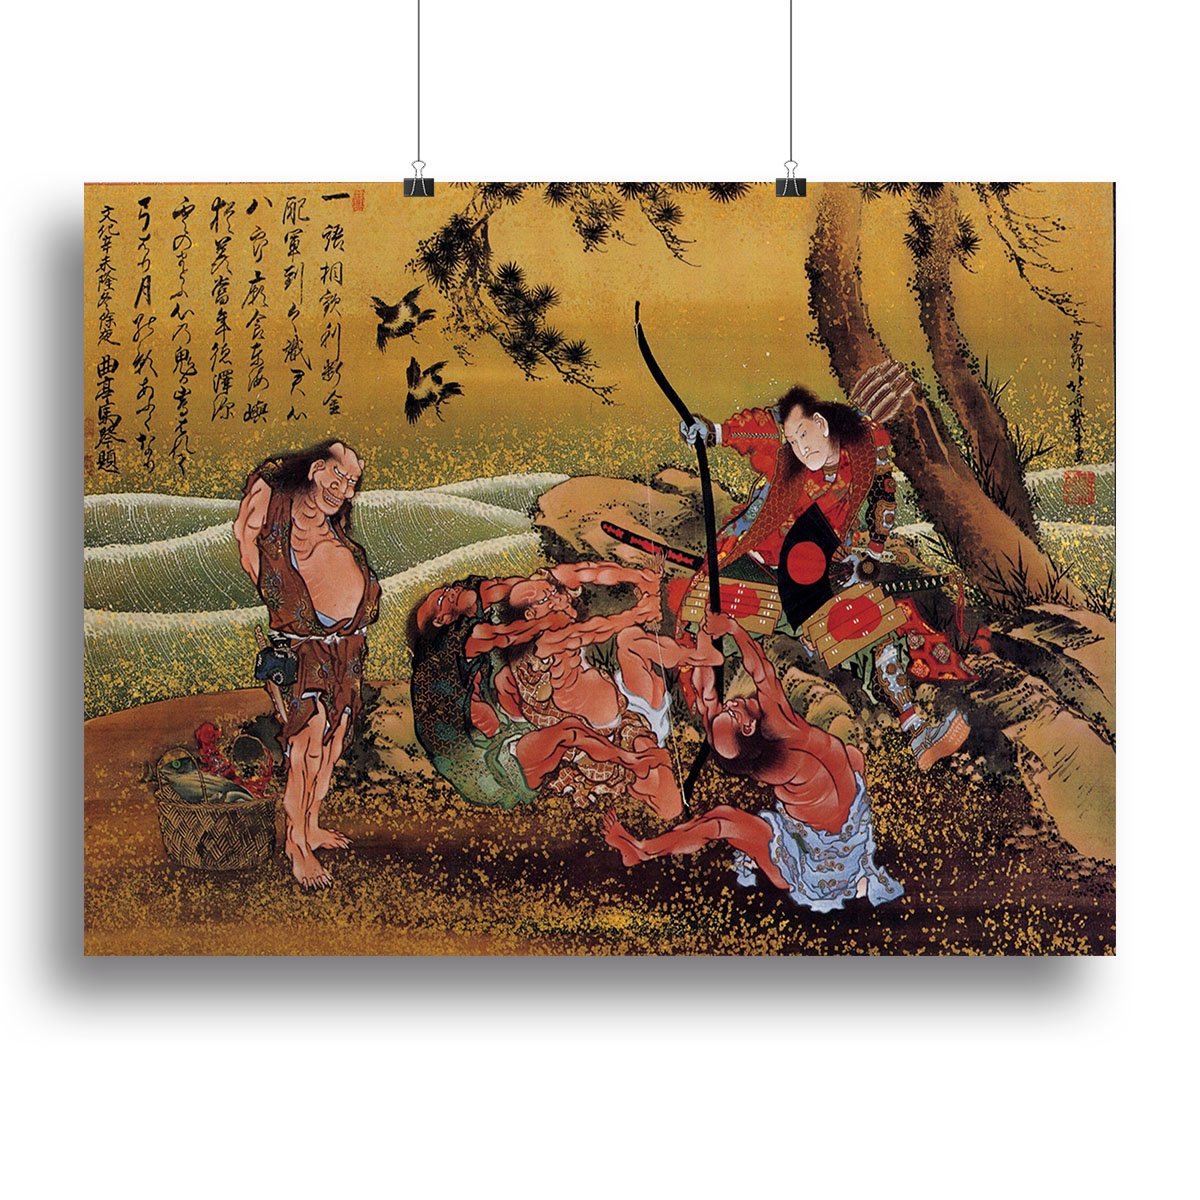 Tametomo on Demon island by Hokusai Canvas Print or Poster